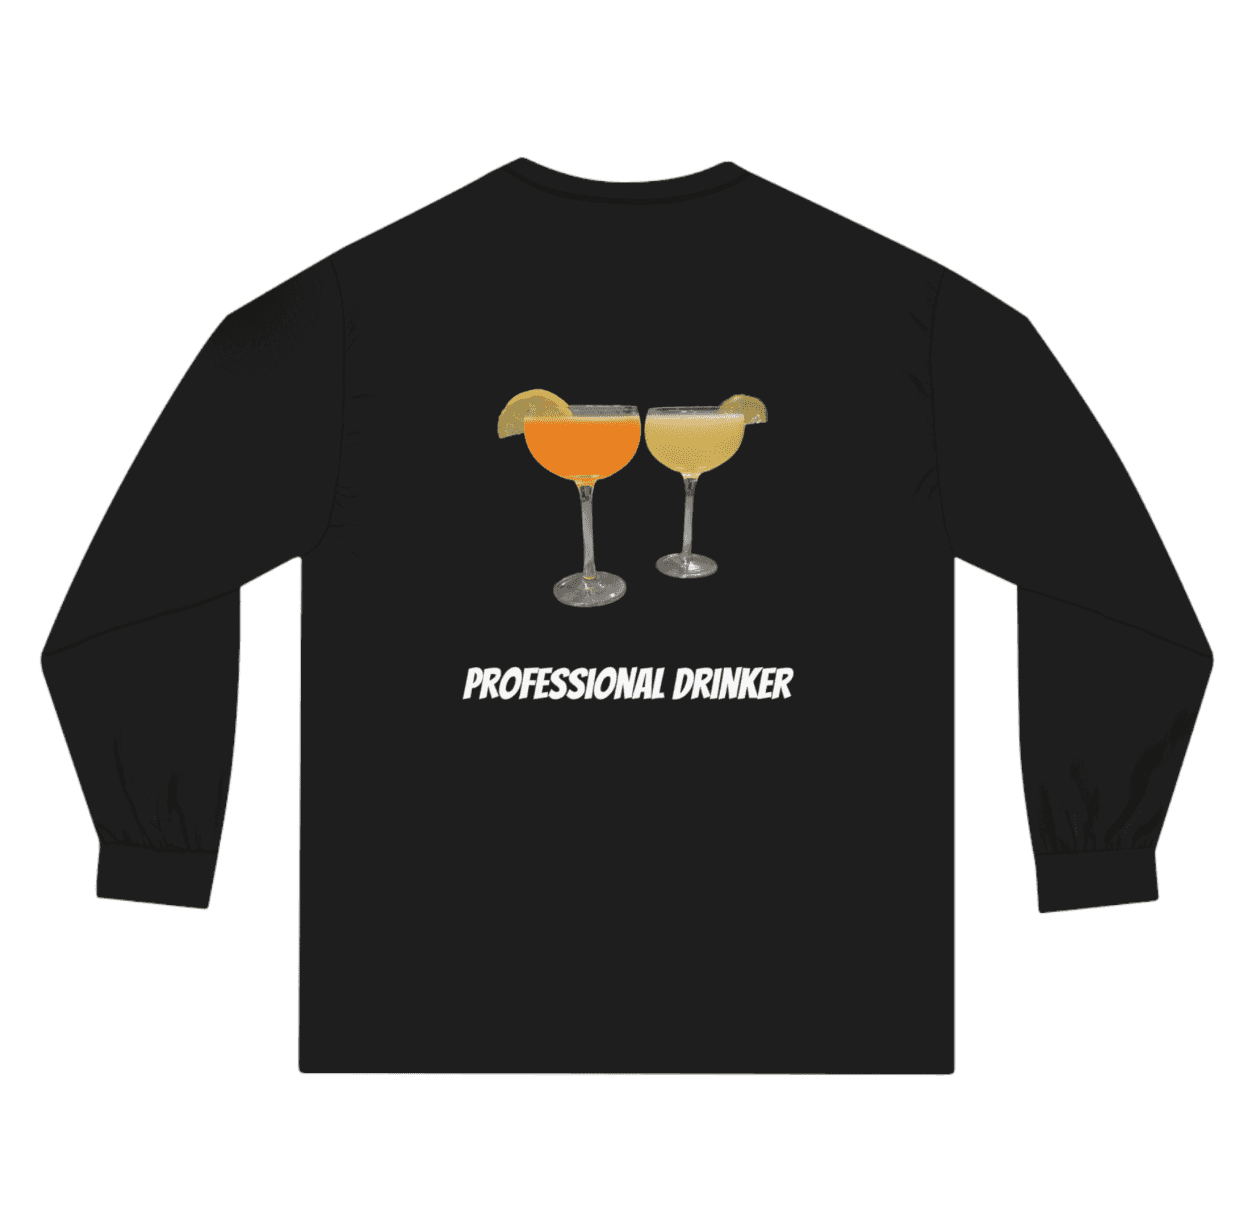 "Professional Drinker" Crewneck Sweater 